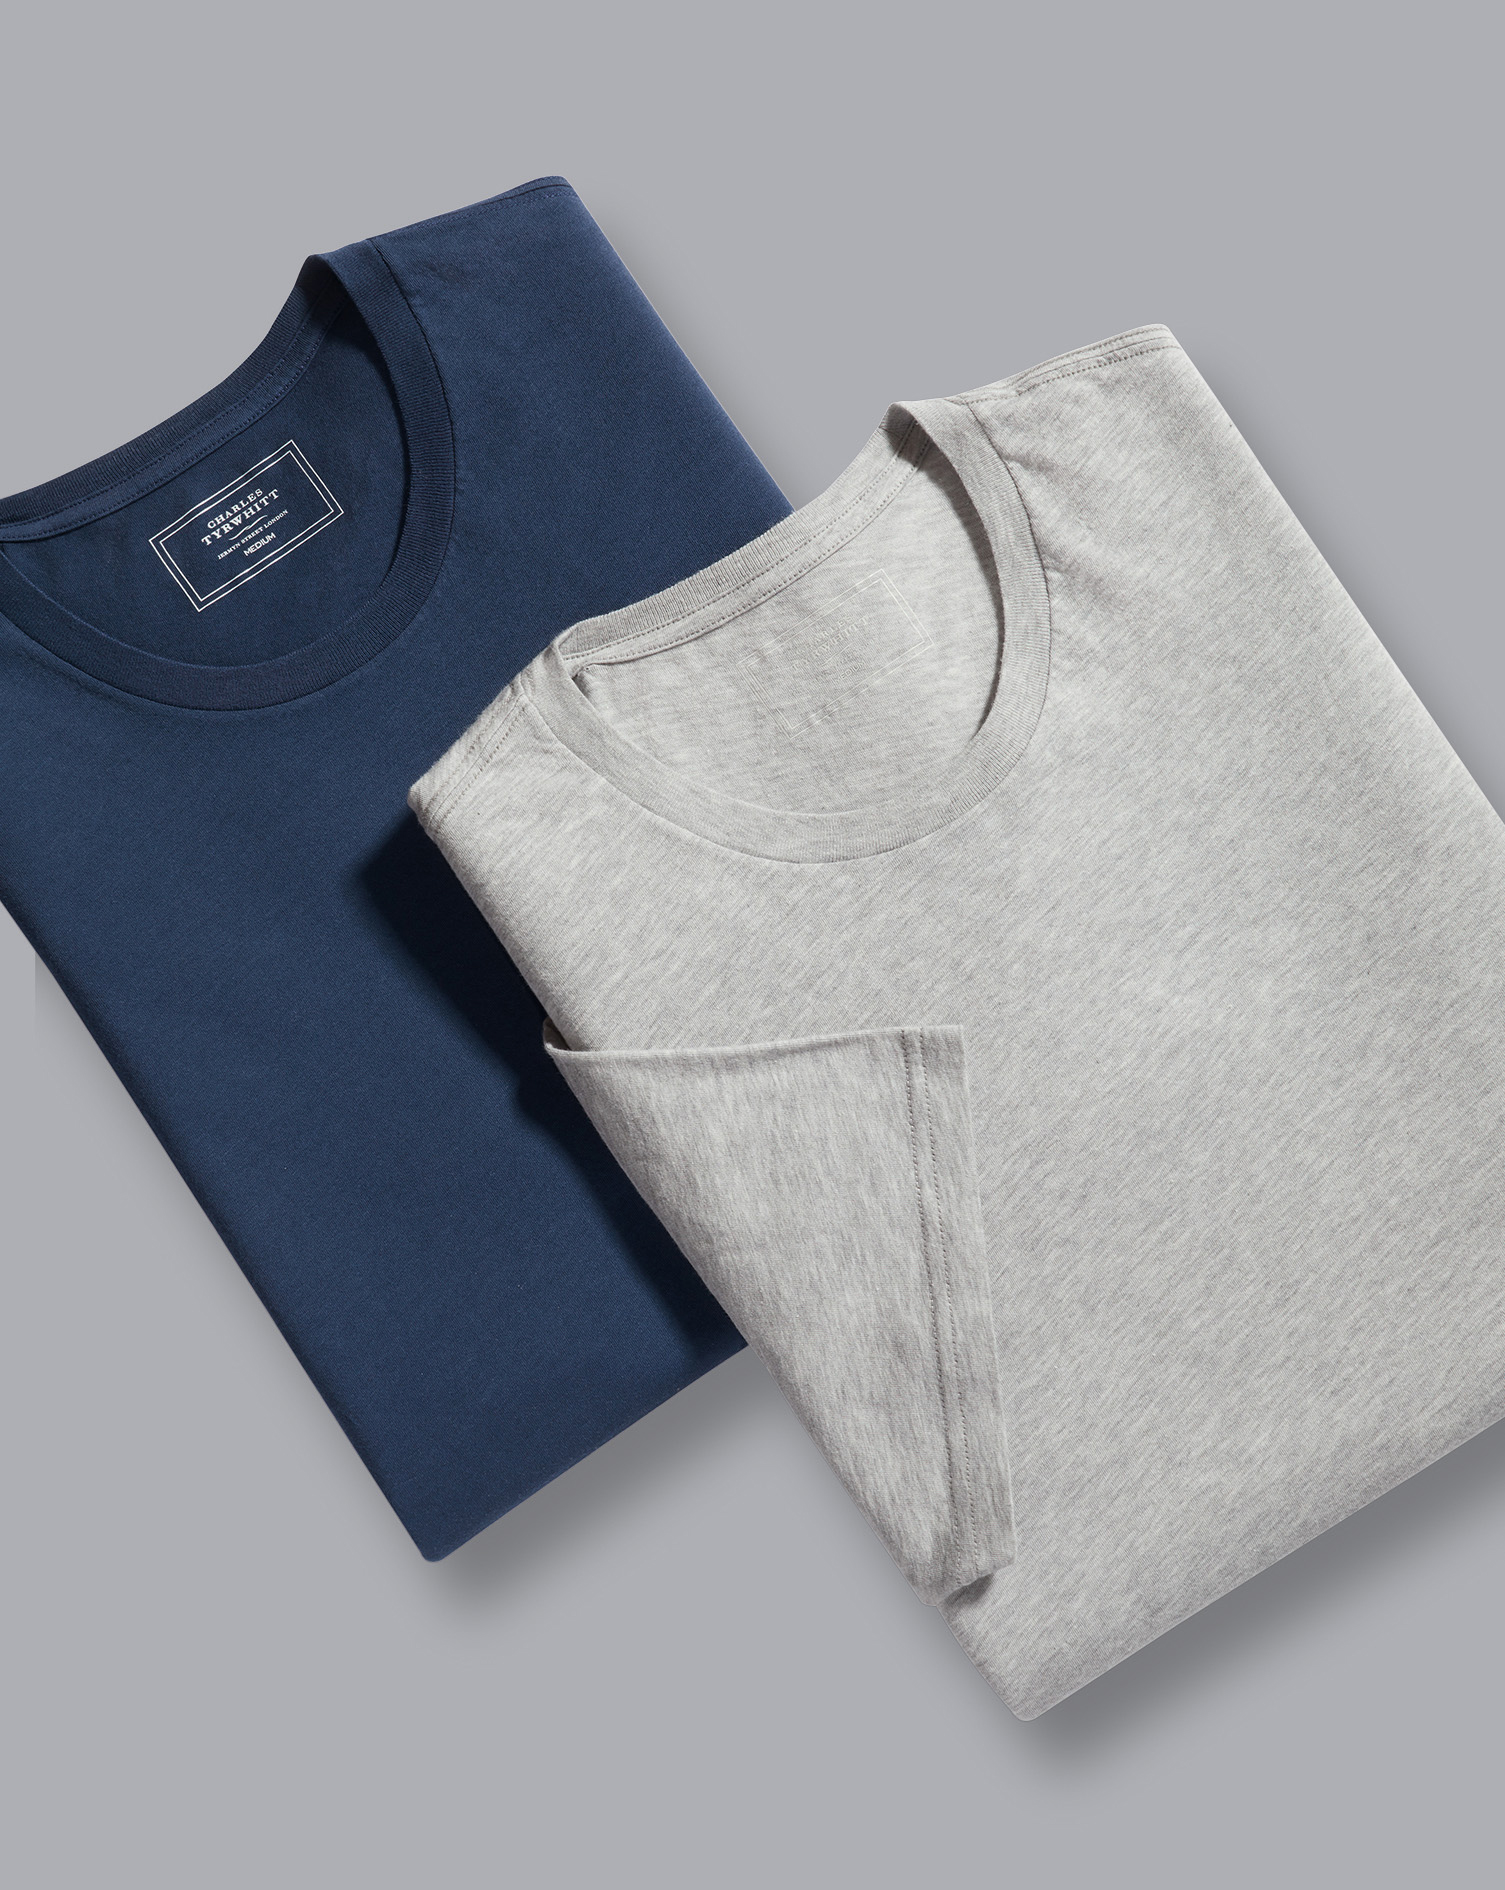 Men's Charles Tyrwhitt 2 Pack Crew Neck T-Shirts - Indigo Blue and Grey Size Small Cotton
